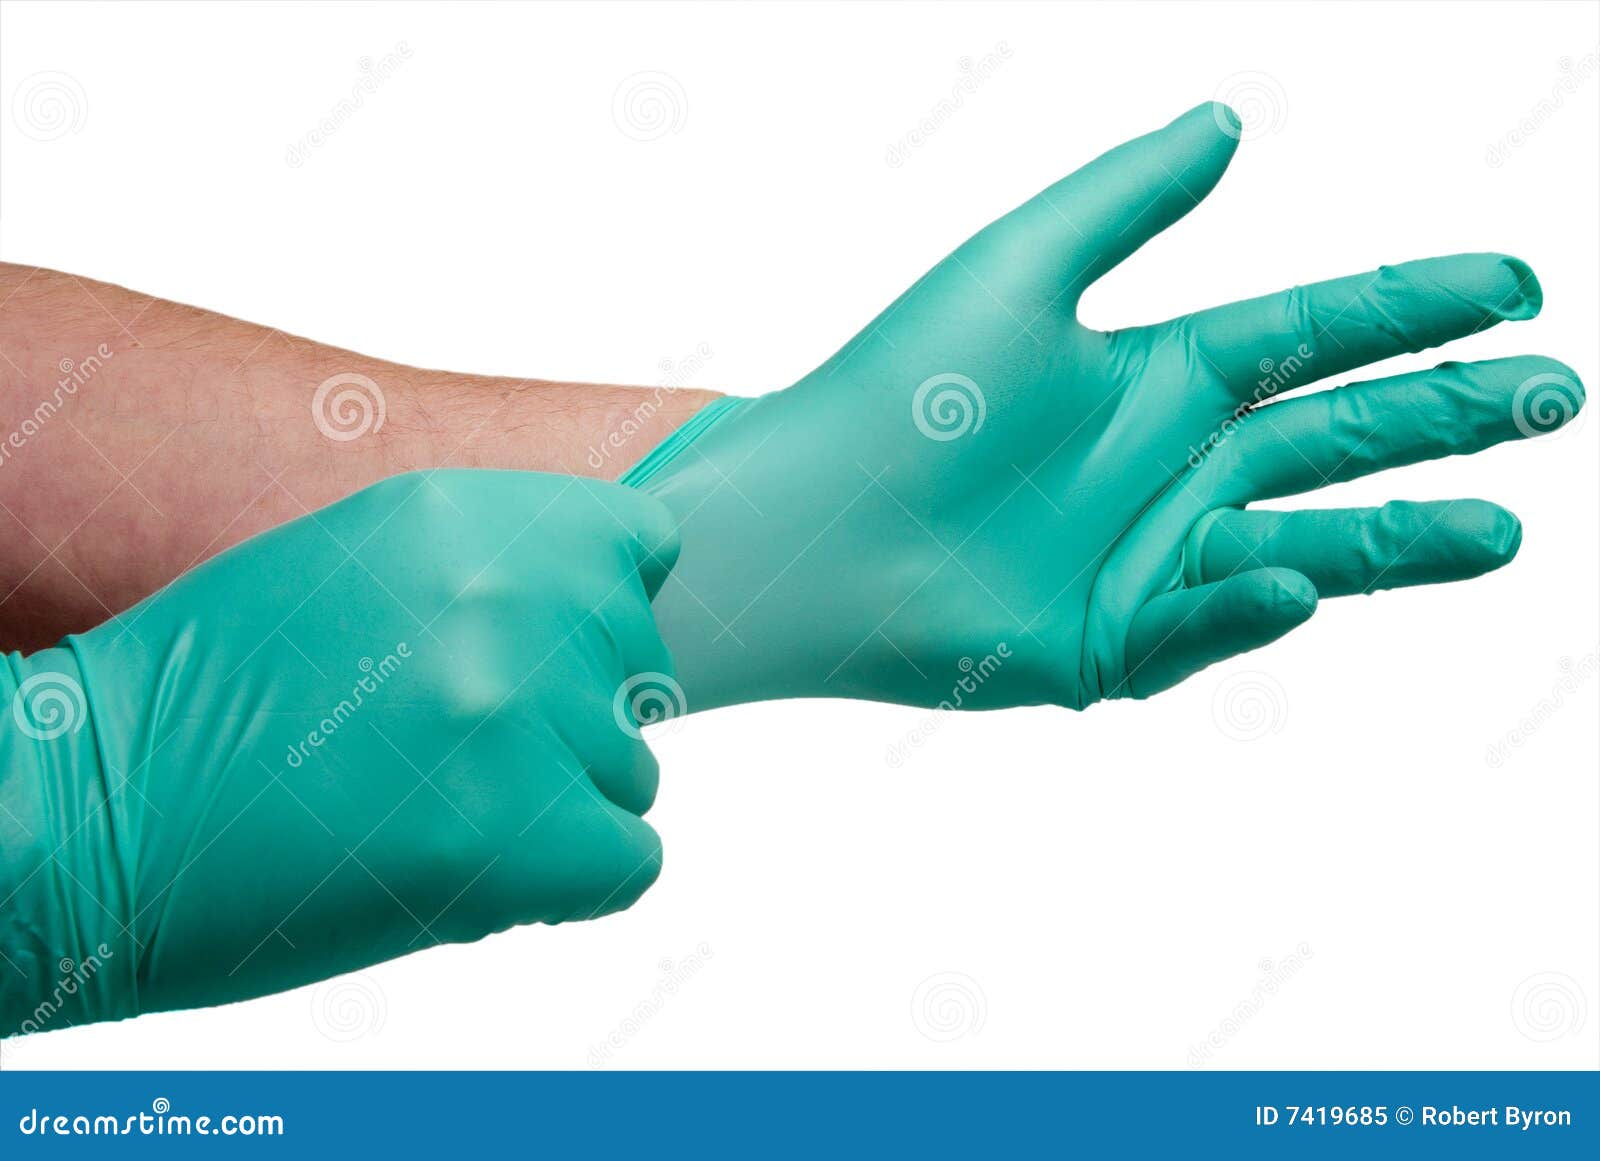 latex free medical gloves